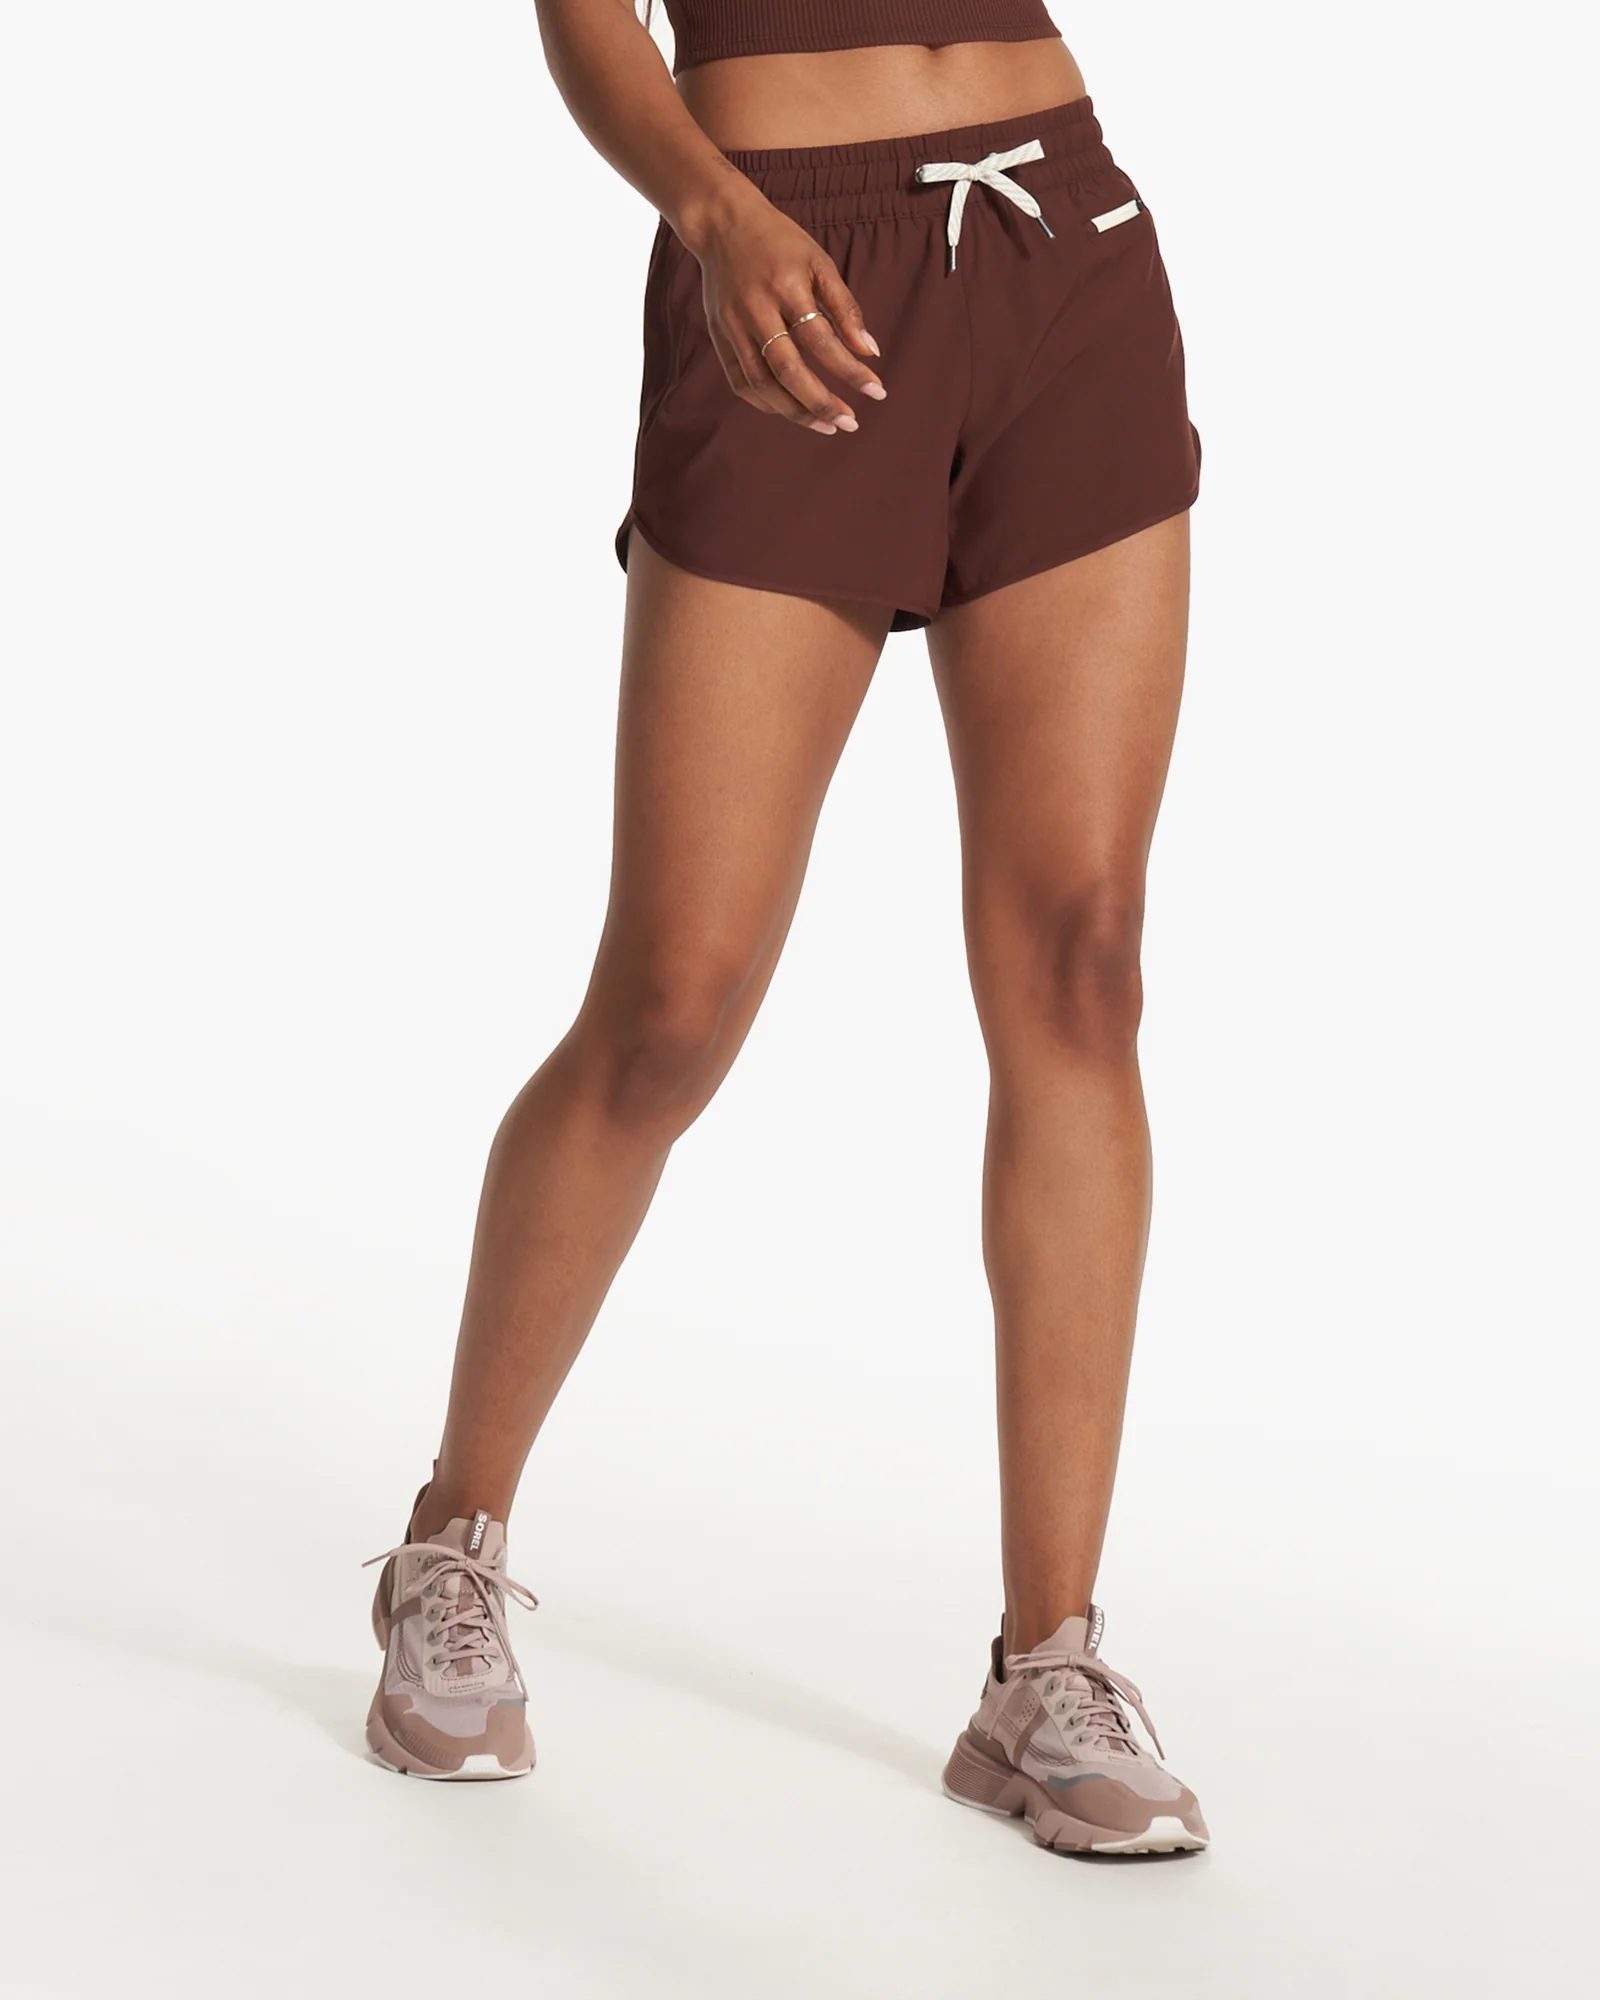 Clementine Short 2.0, Women's Black Running Shorts